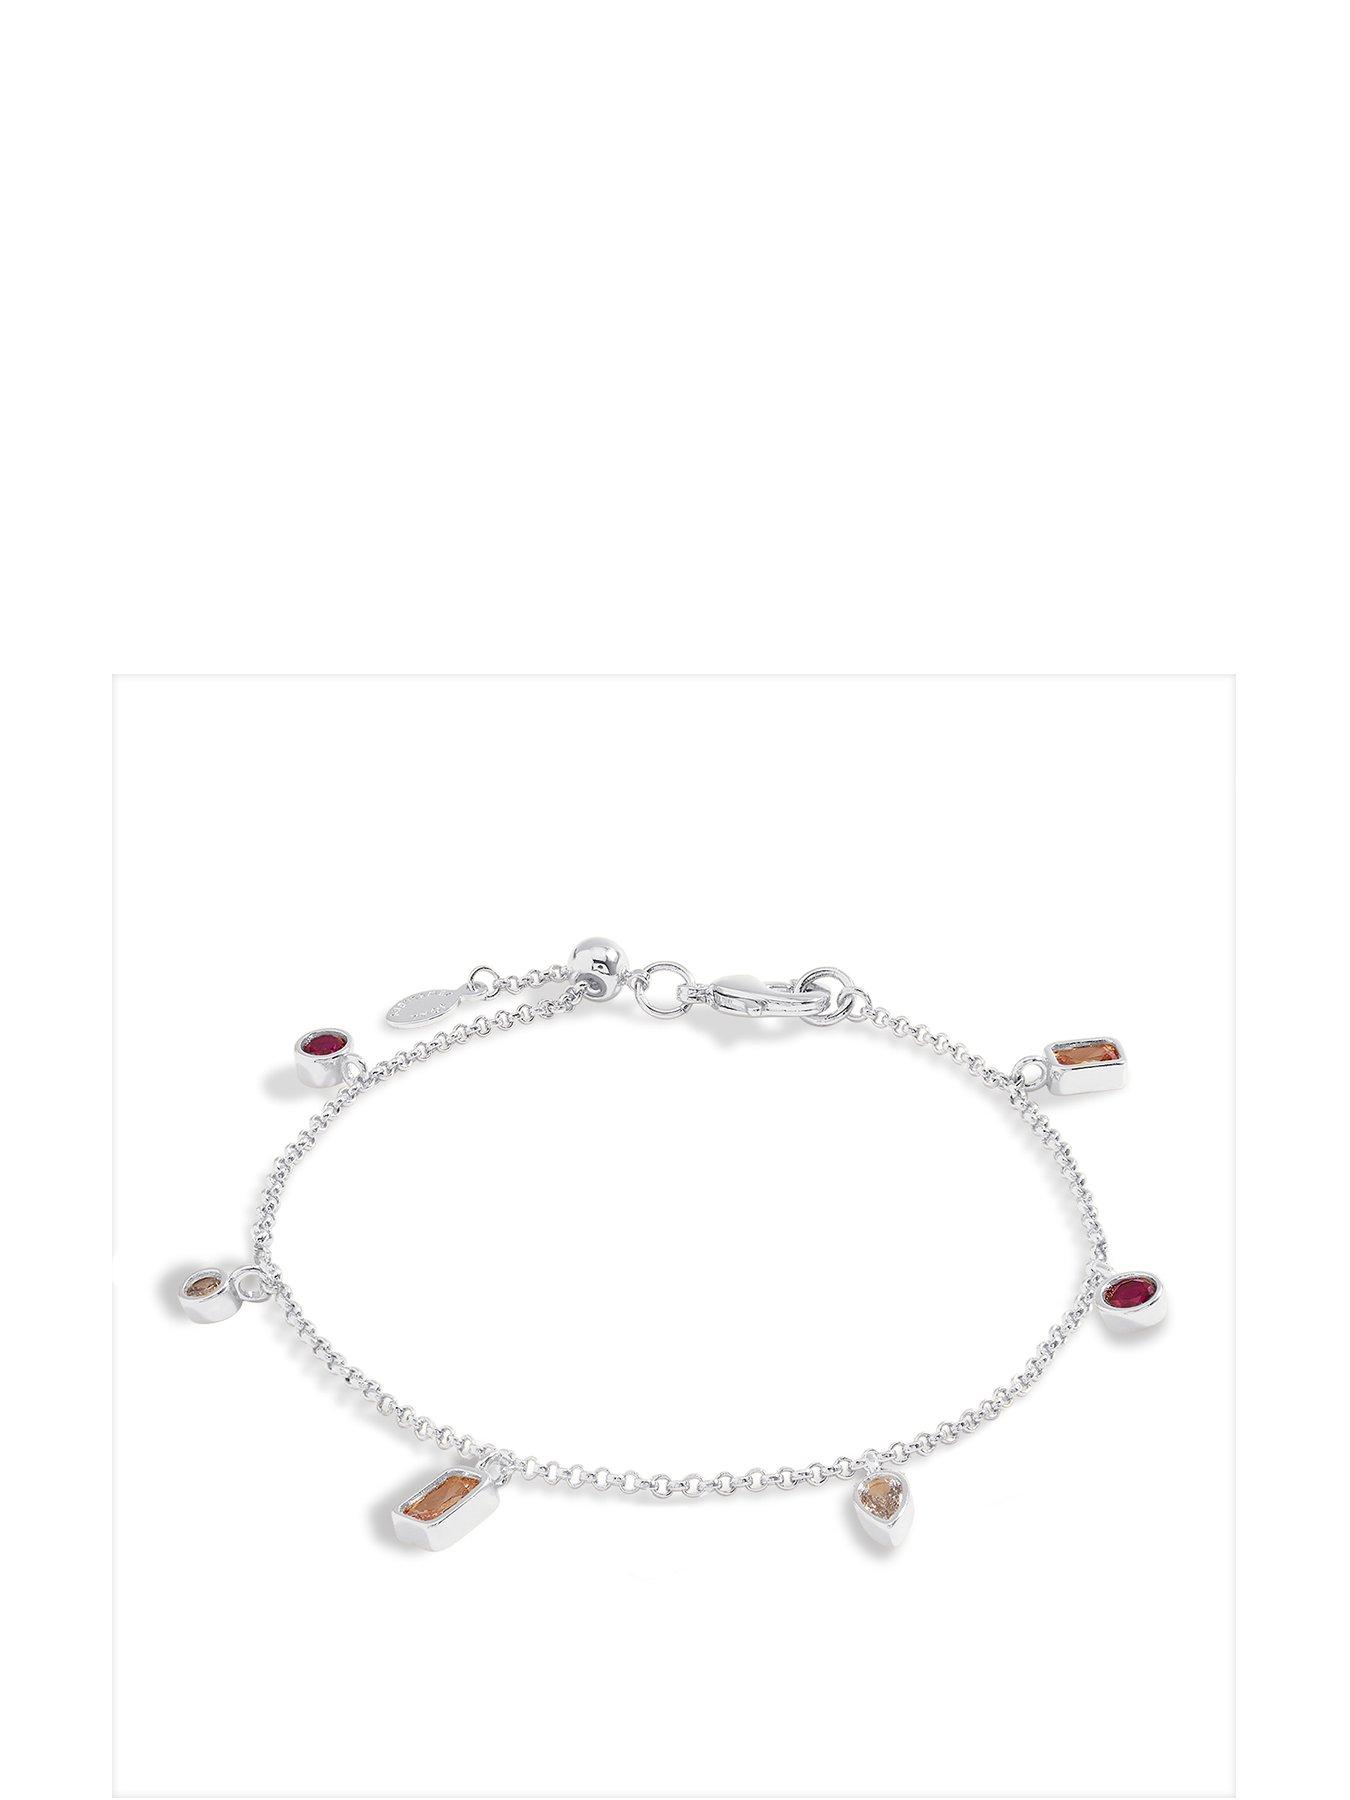 Product photograph of Joma Jewellery Gem Glow Multi Gem Silver Bracelet 19cm Adjustable from very.co.uk